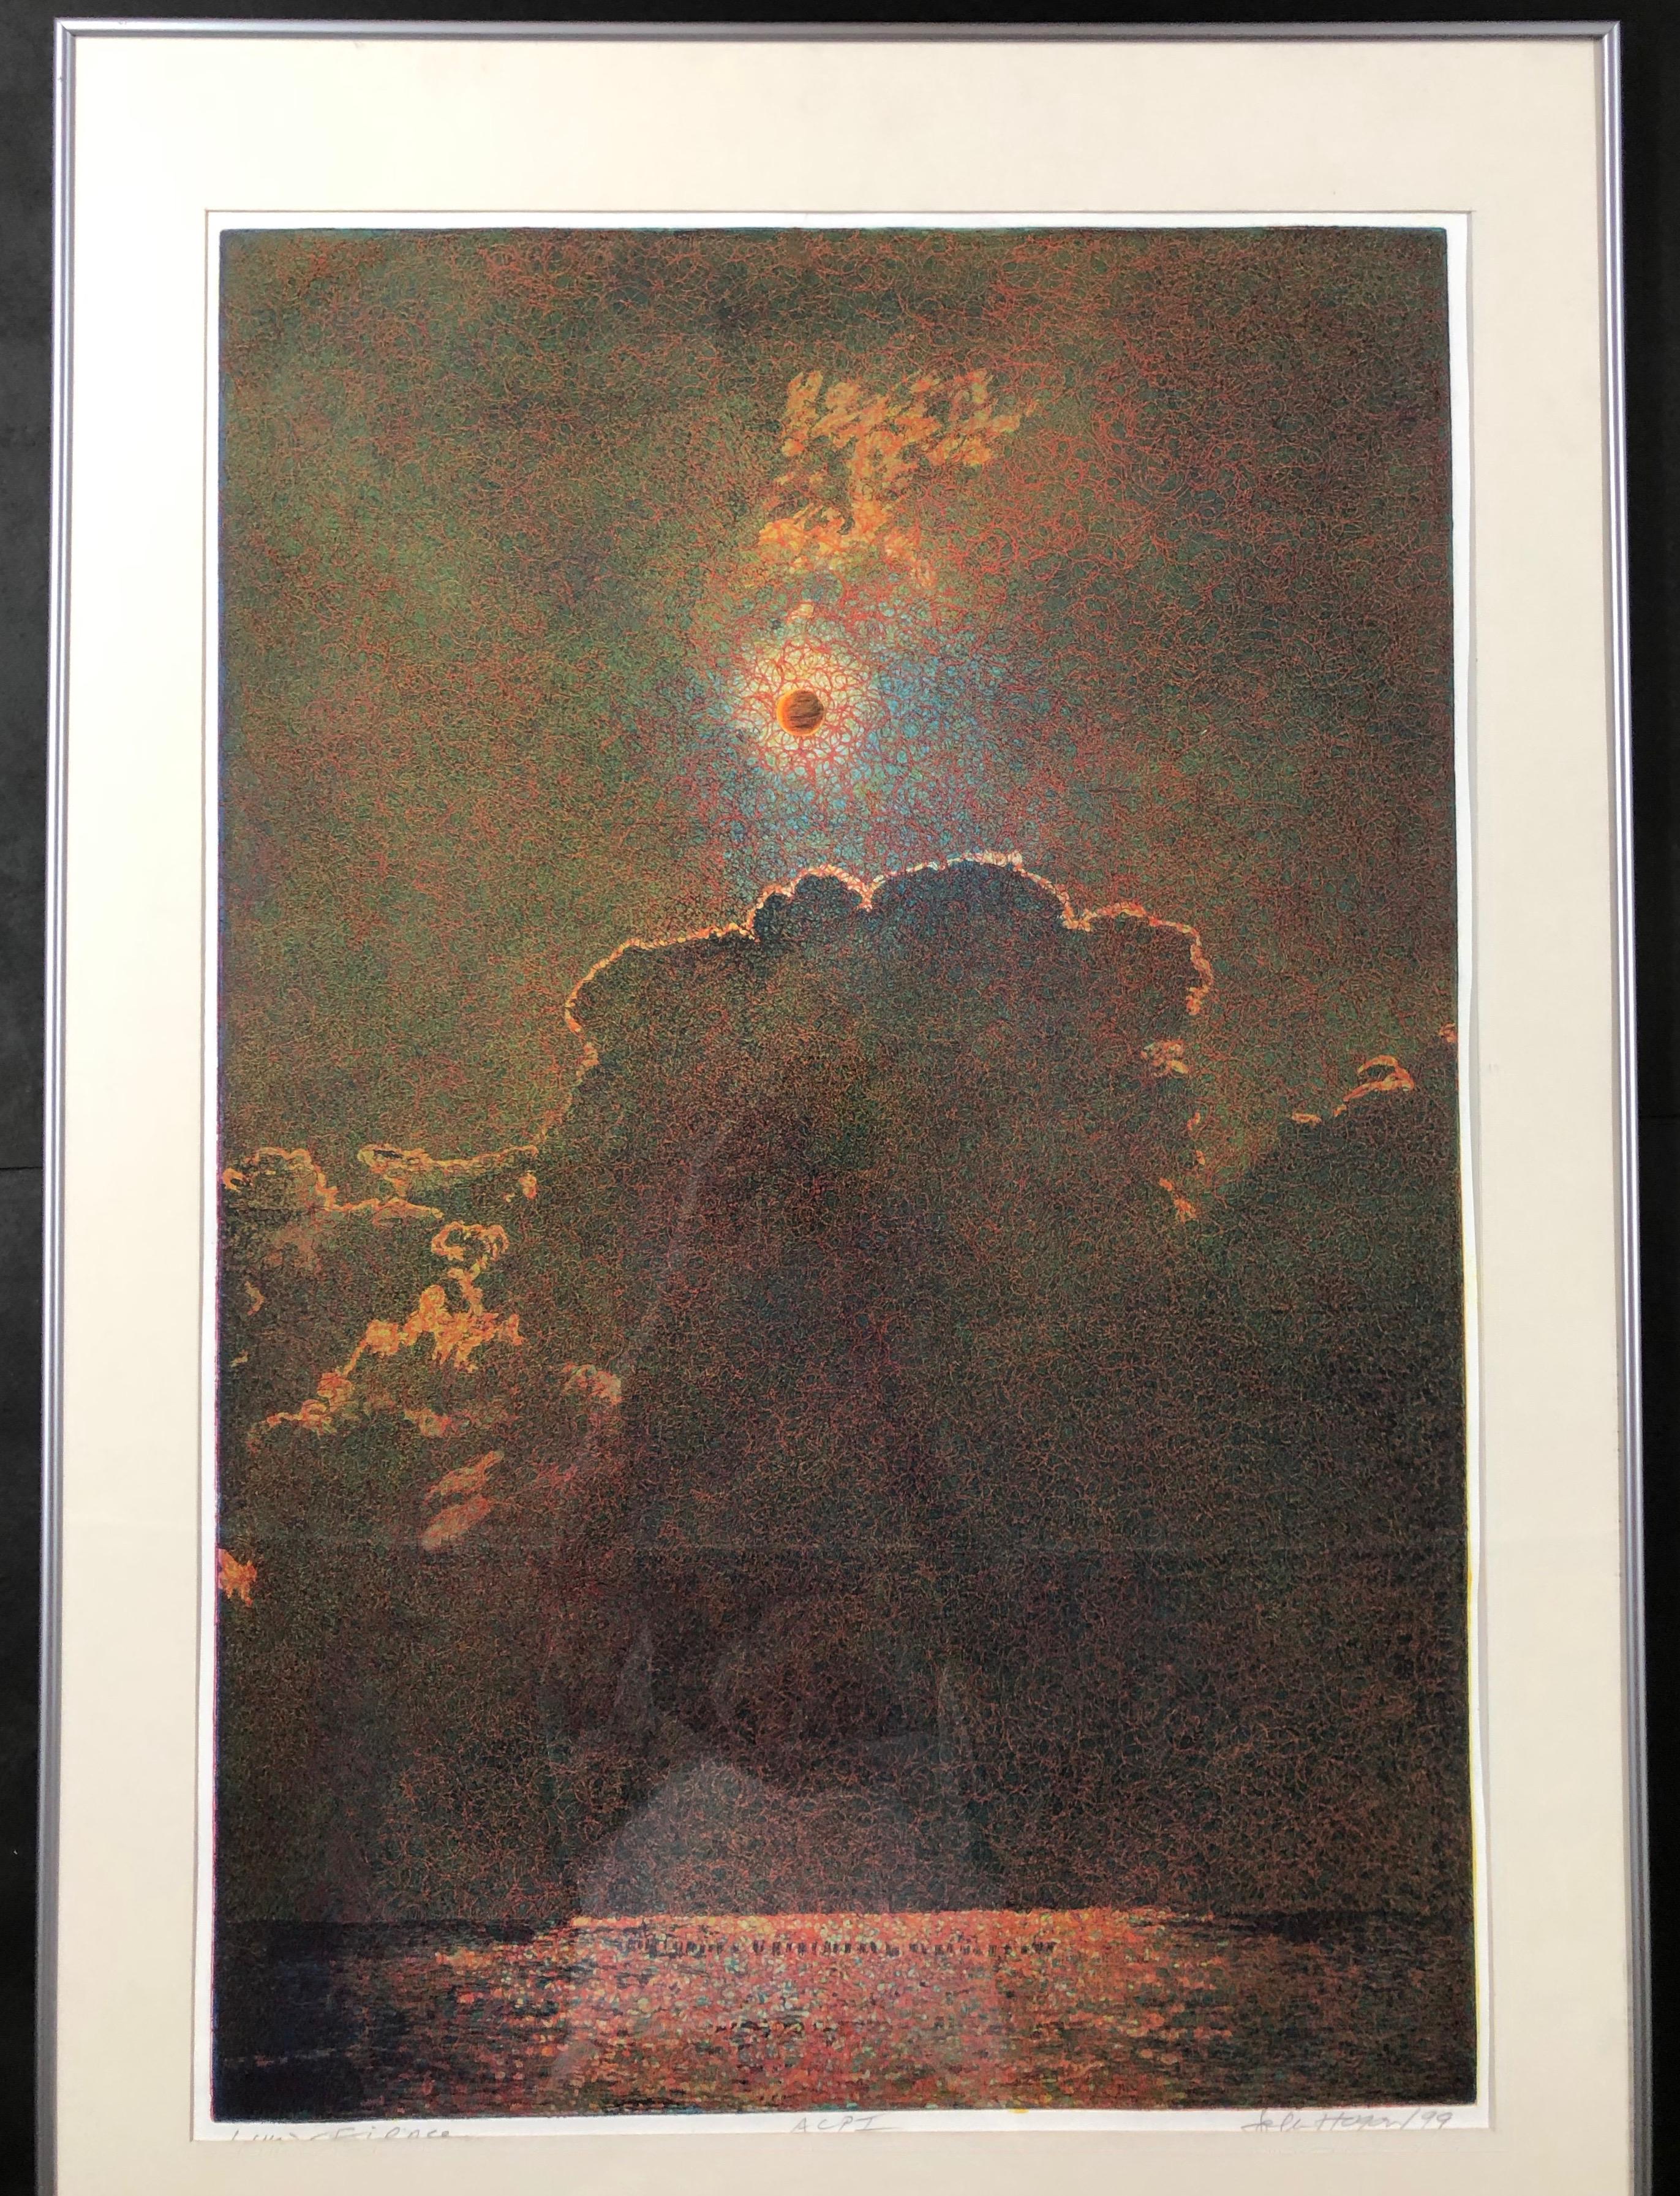 Lunar Eclipse by John Hogan etching landscape red, brown, black limited edition 